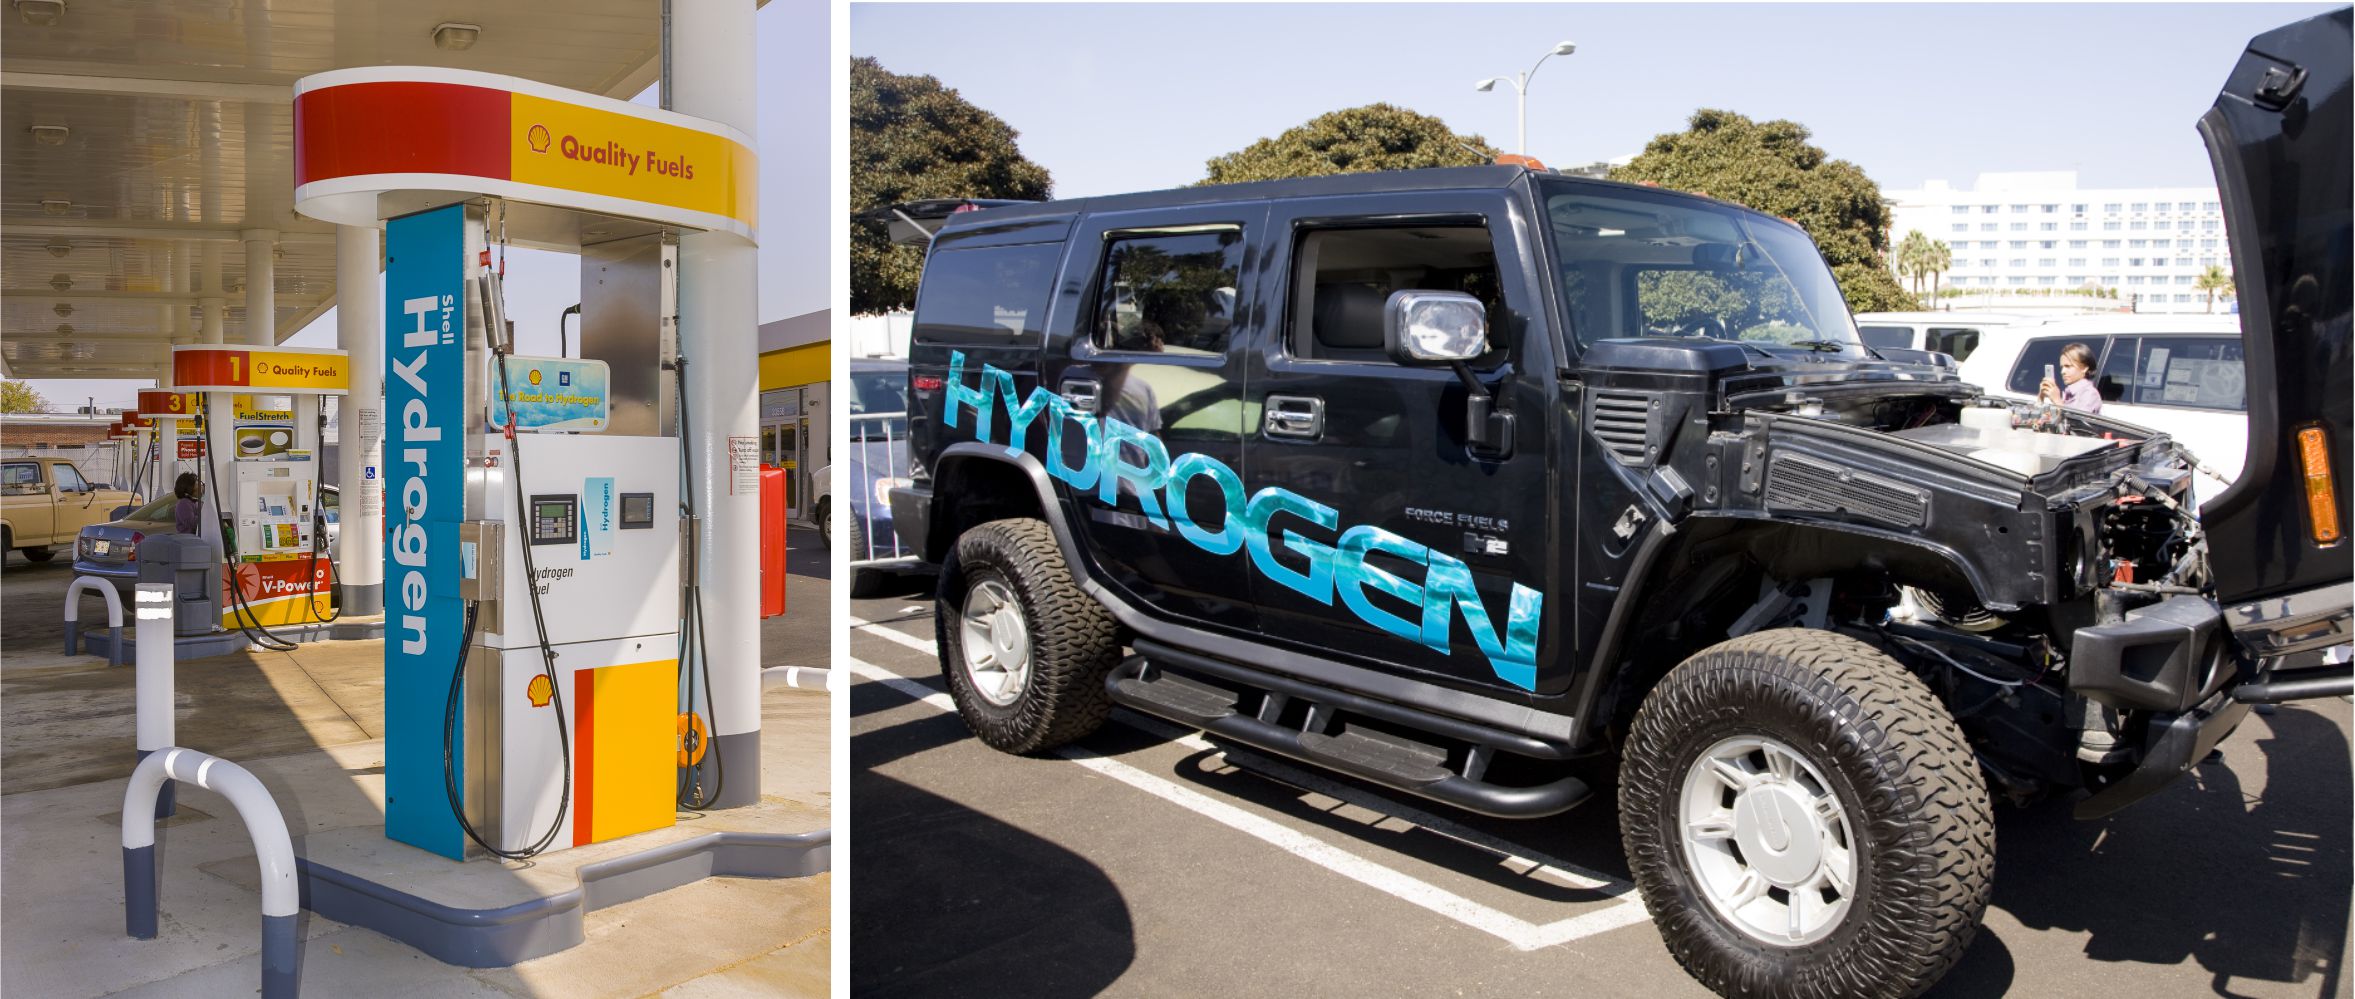 Hydrogen vehicle fuel